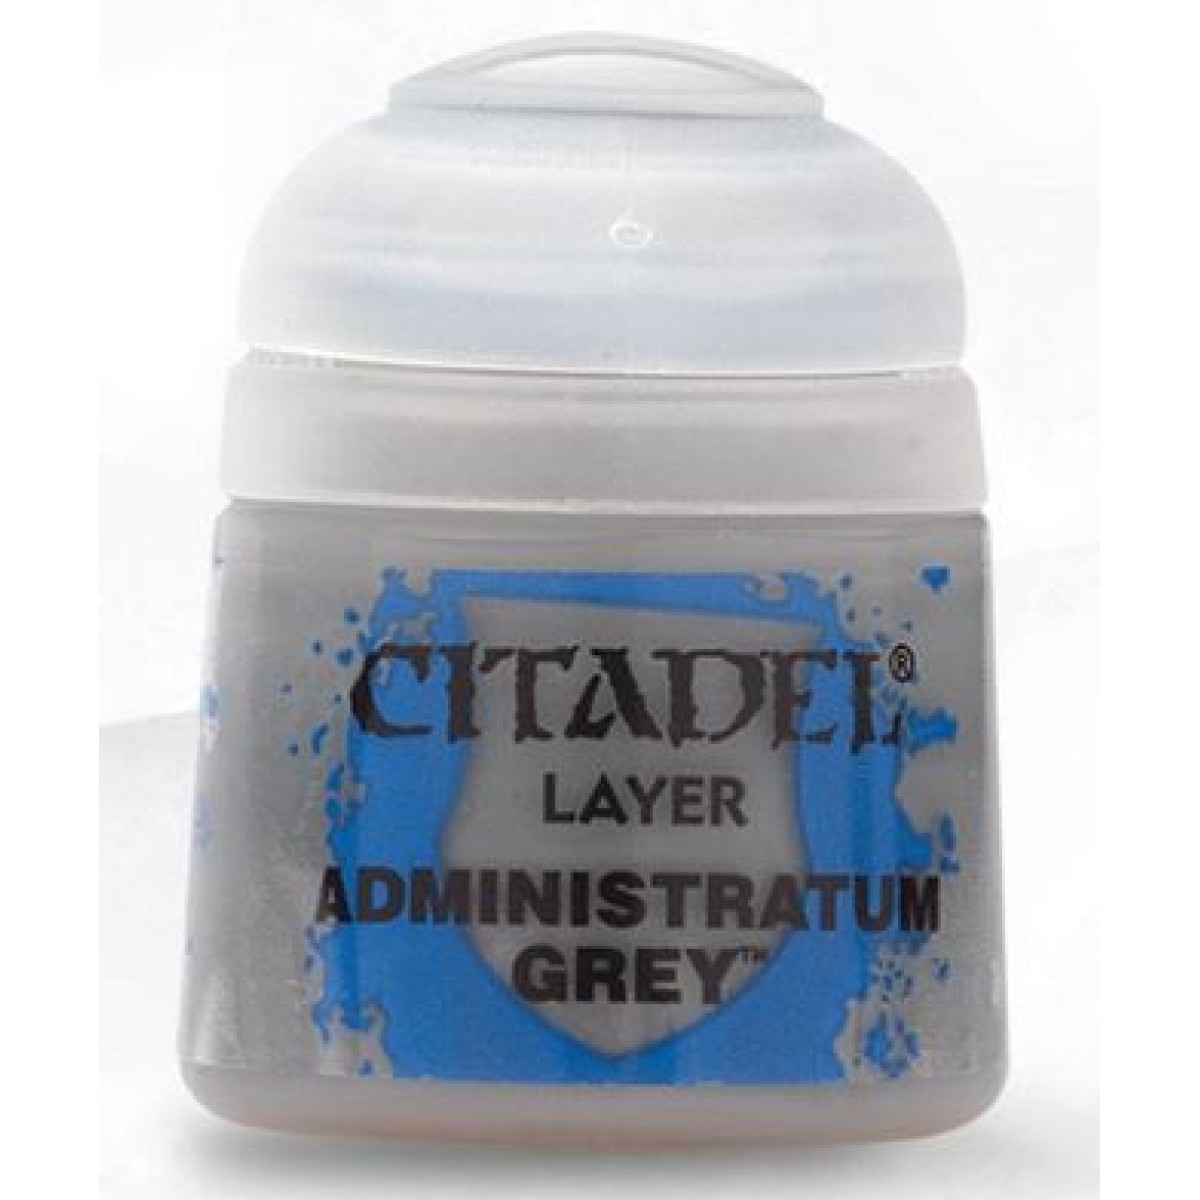 Citadel Layer Paint - Administratum Grey